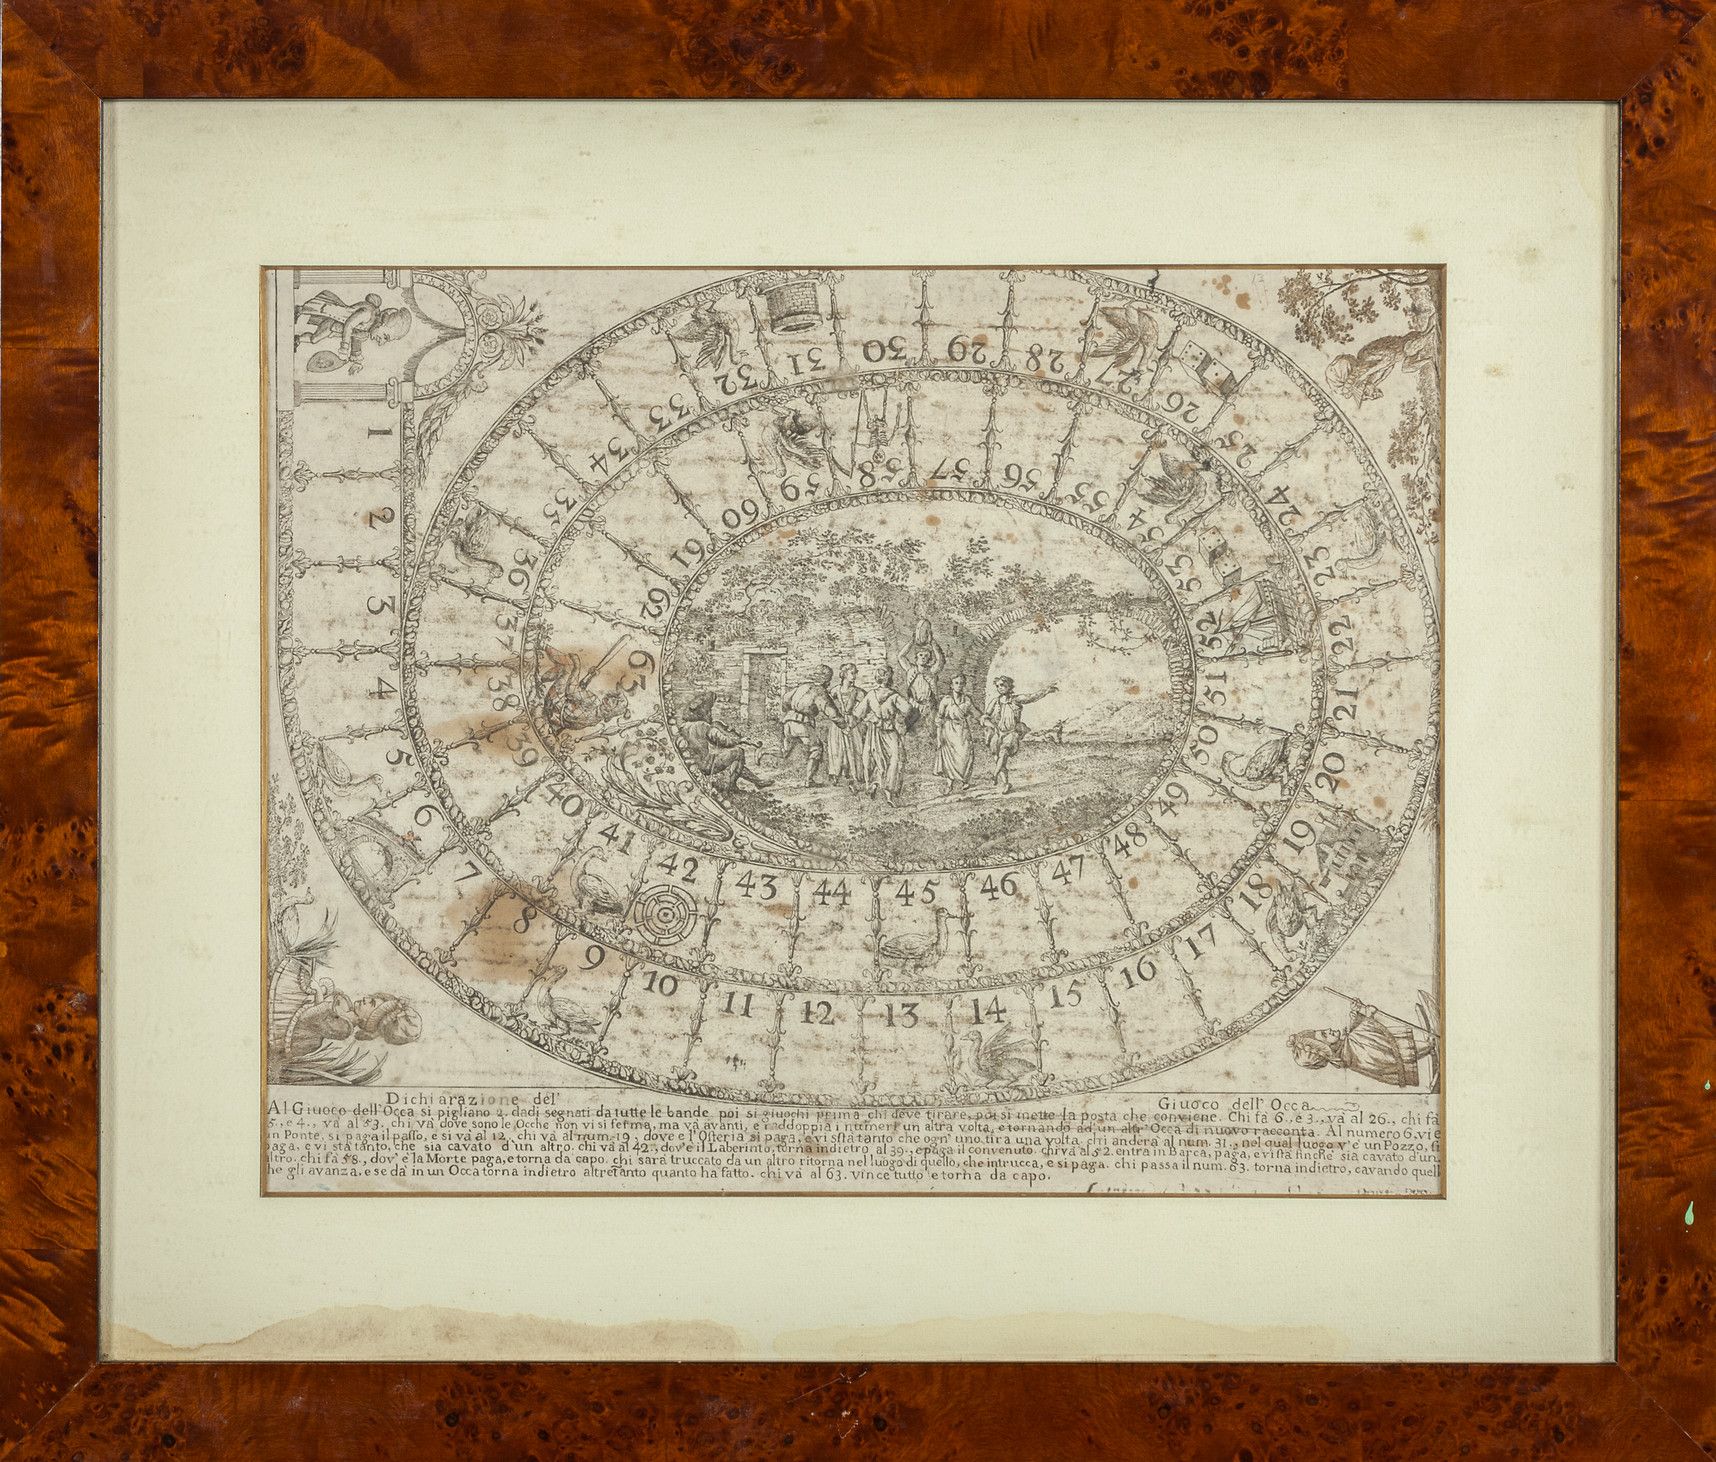 OGGETTISTICA 鹅的游戏宣言 意大利-威尼斯 18世纪
厘米。46x36